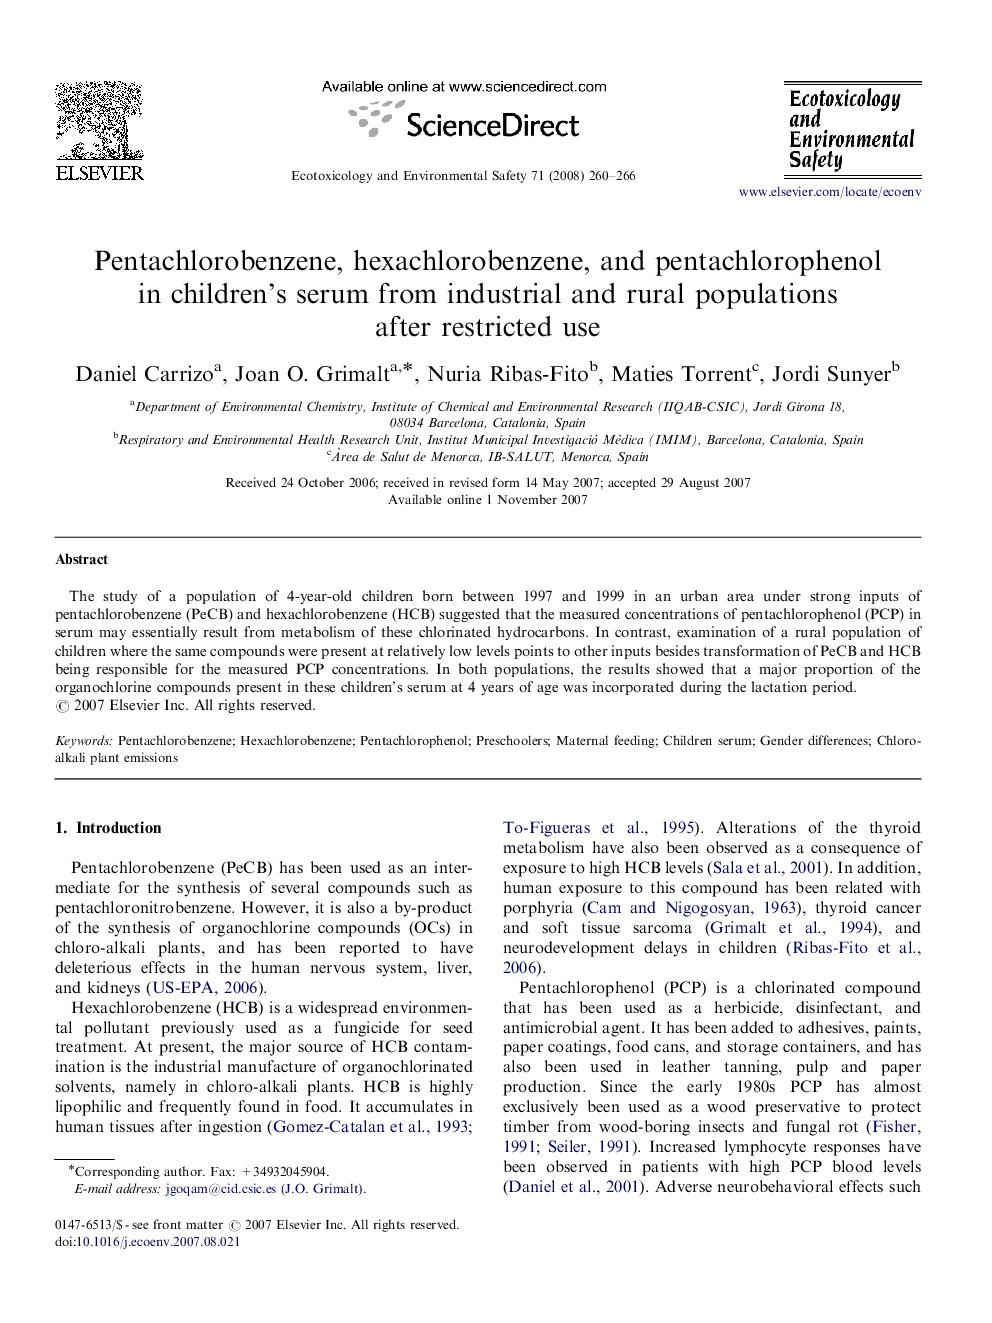 Pentachlorobenzene, hexachlorobenzene, and pentachlorophenol in children's serum from industrial and rural populations after restricted use